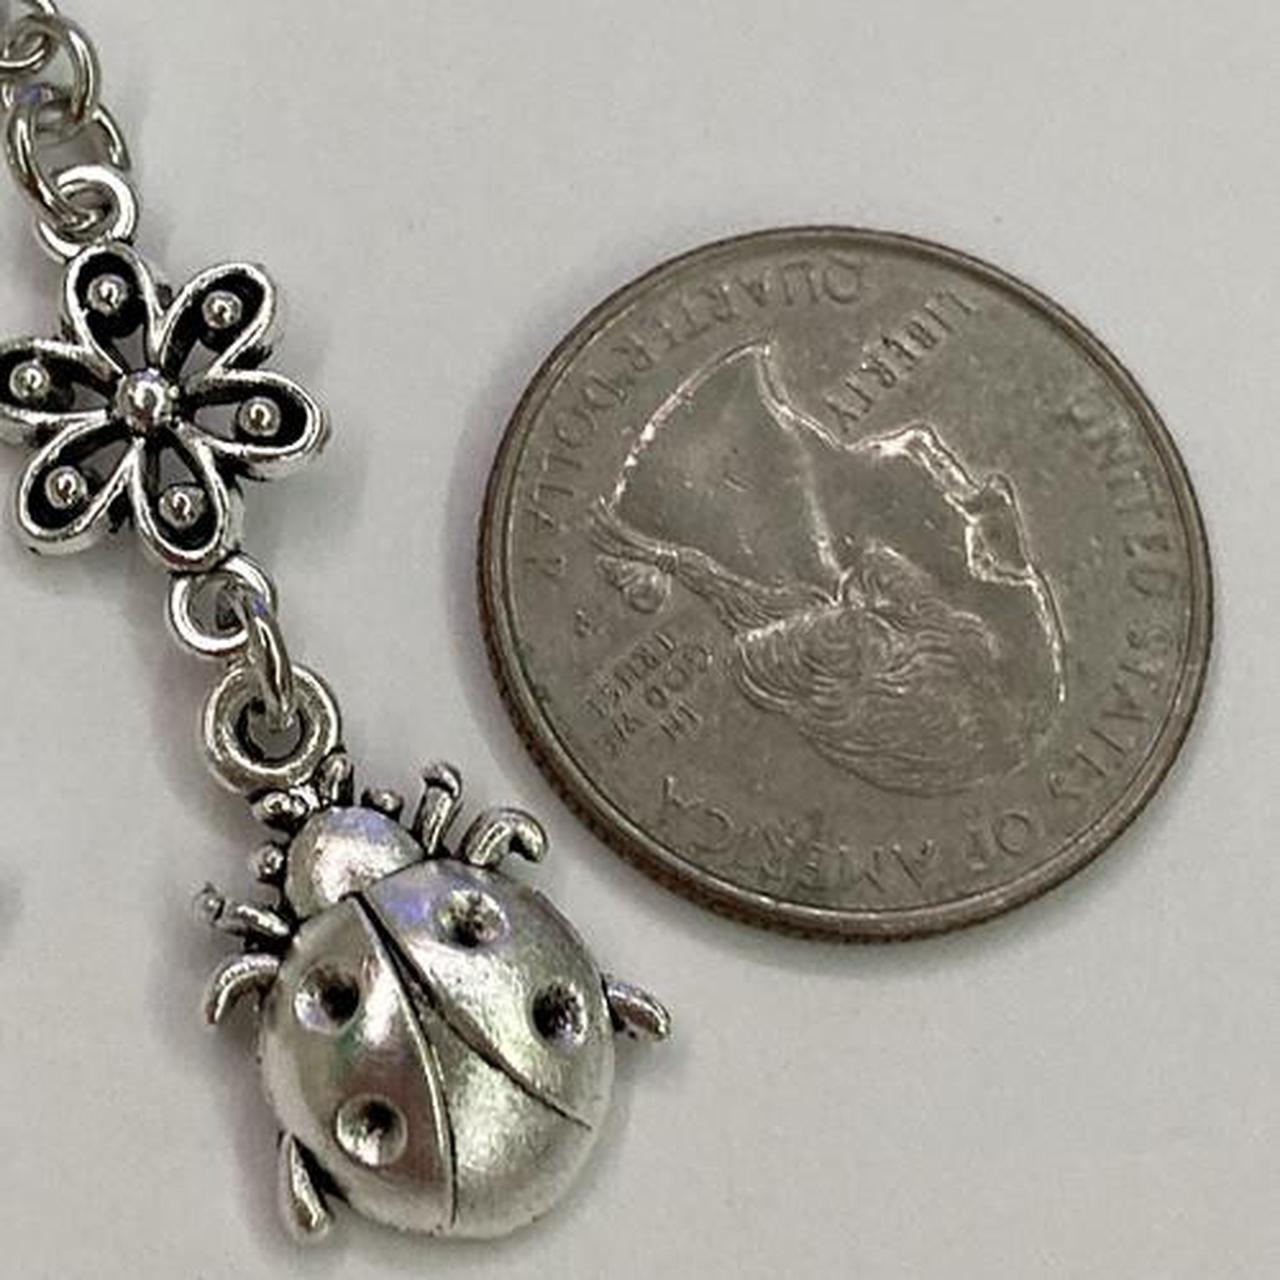 Product Image 2 - Floral Ladybug Earrings 🐞
Handmade silver